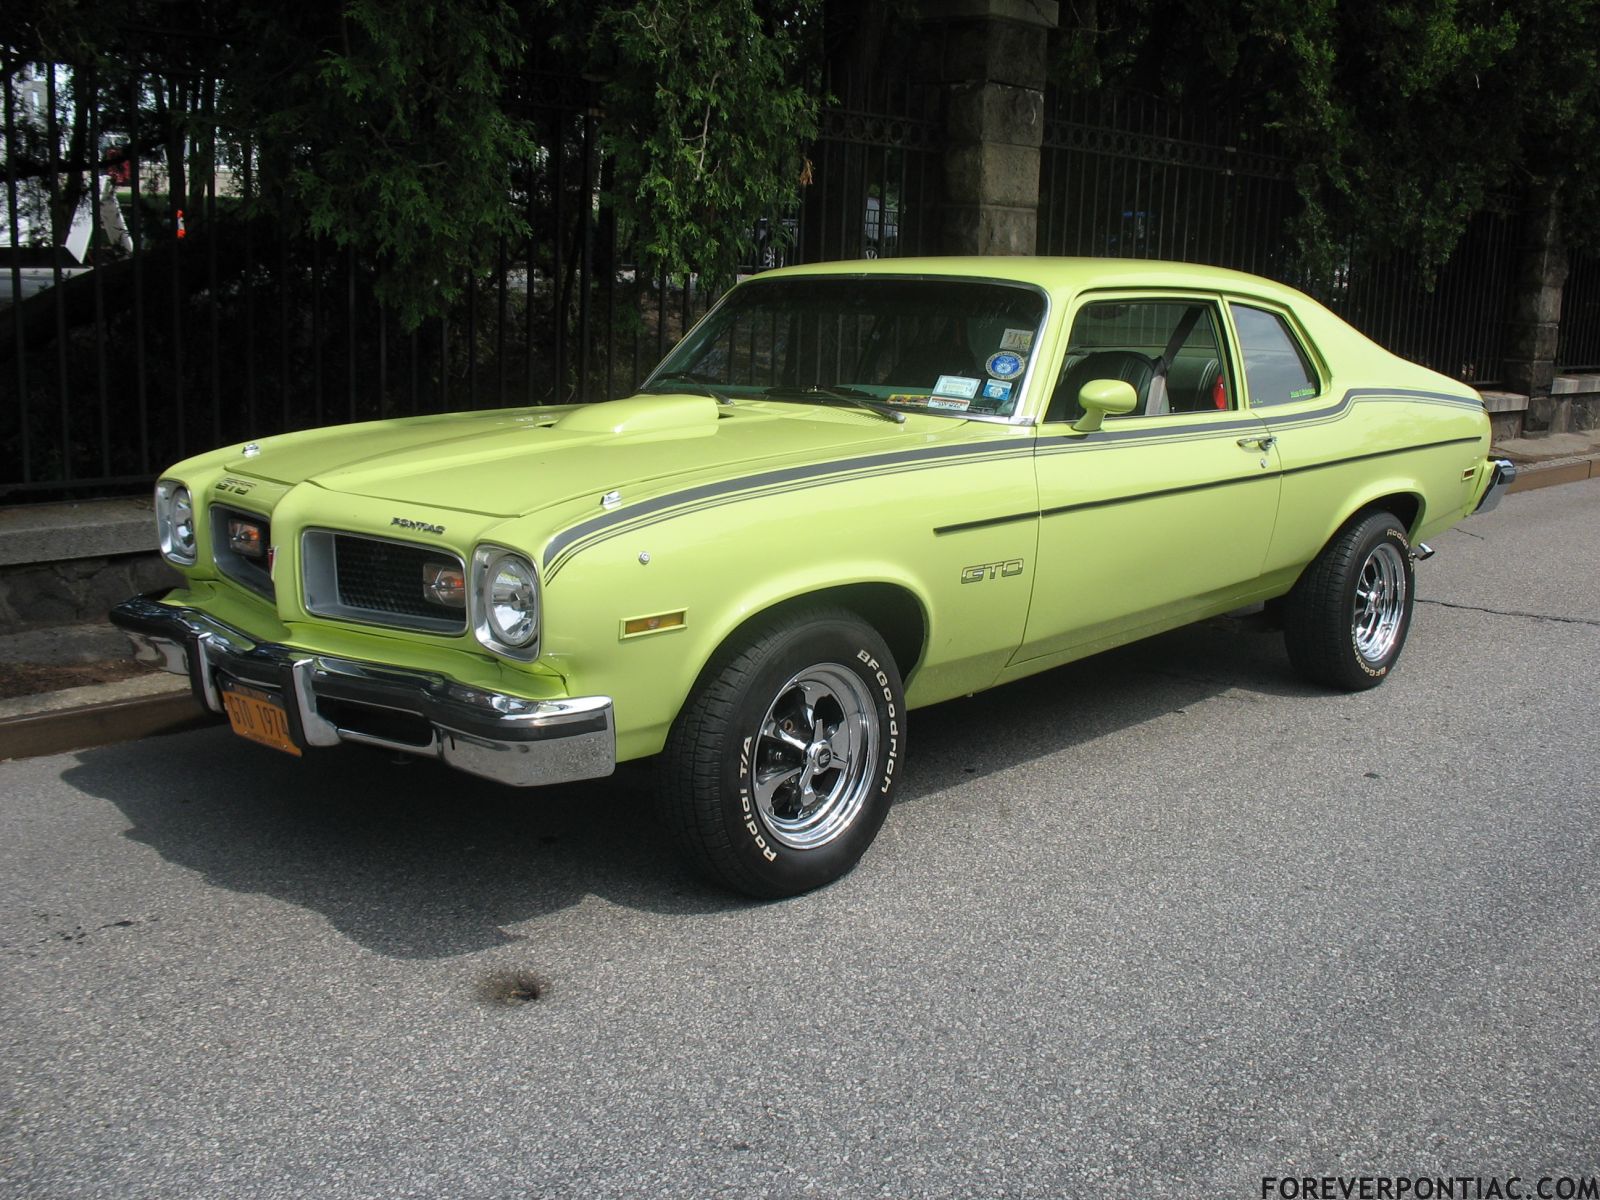 My LiL' 1974 GTO